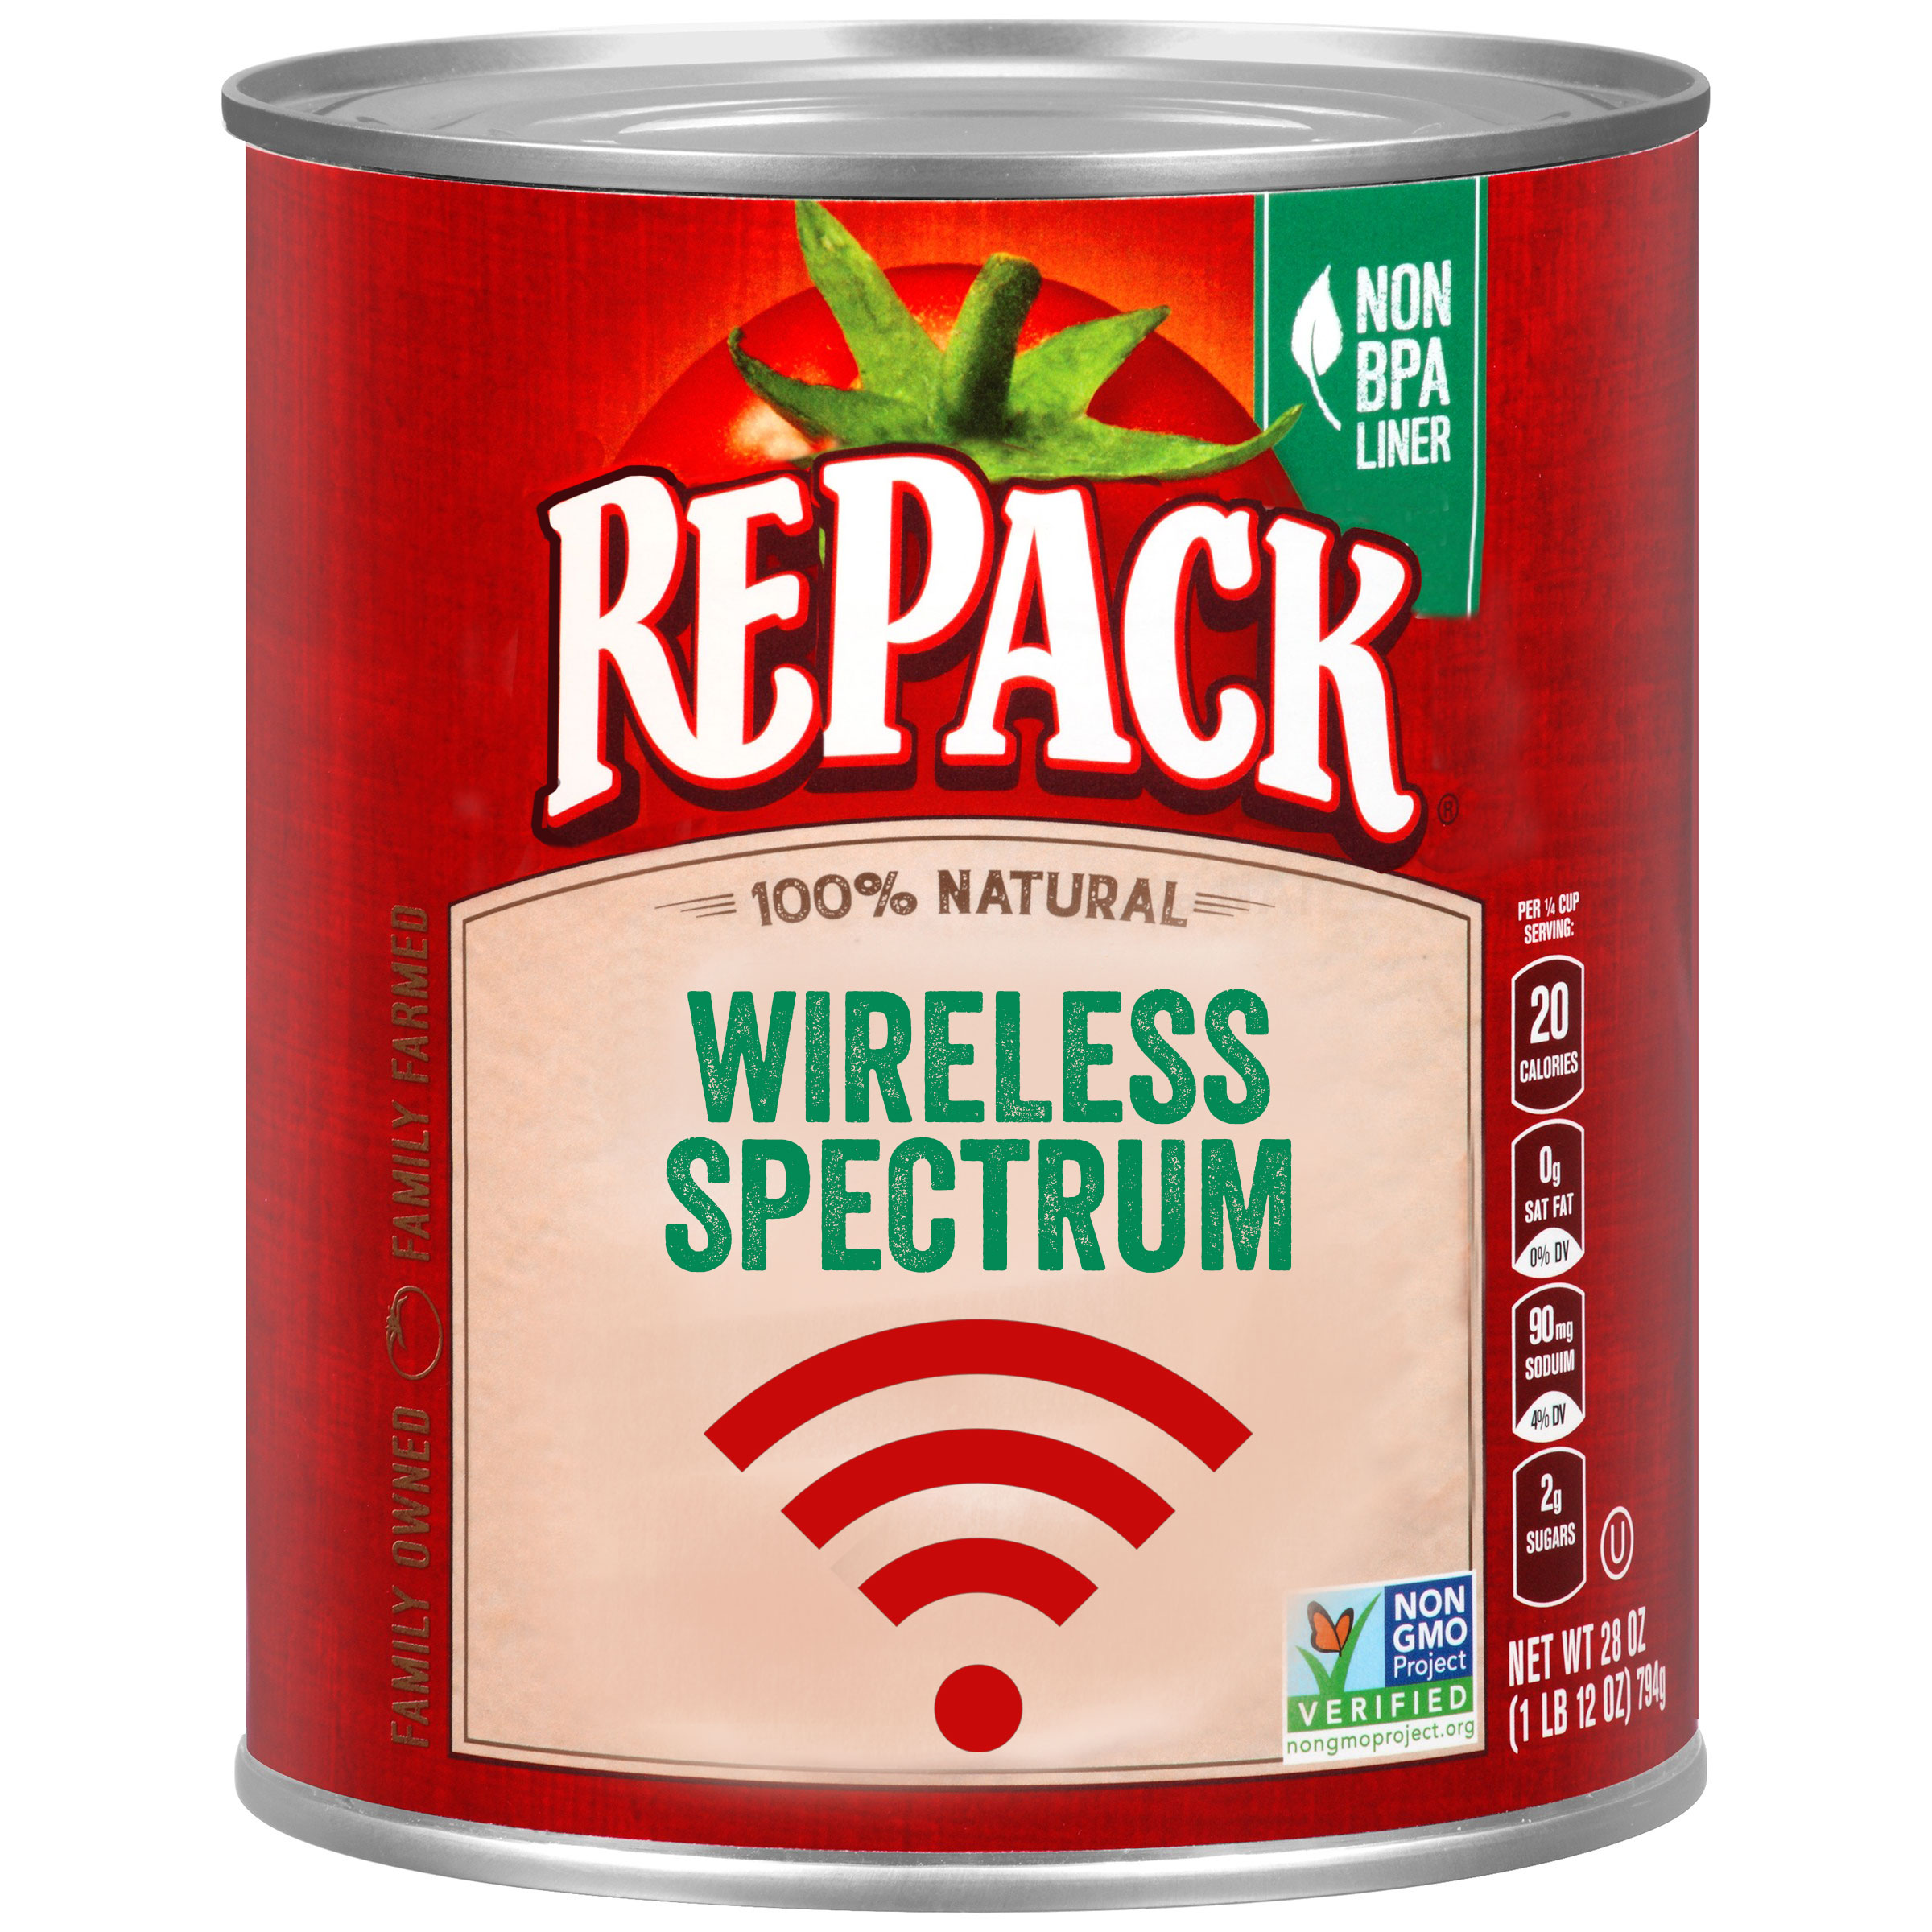 WirelessSpectrum